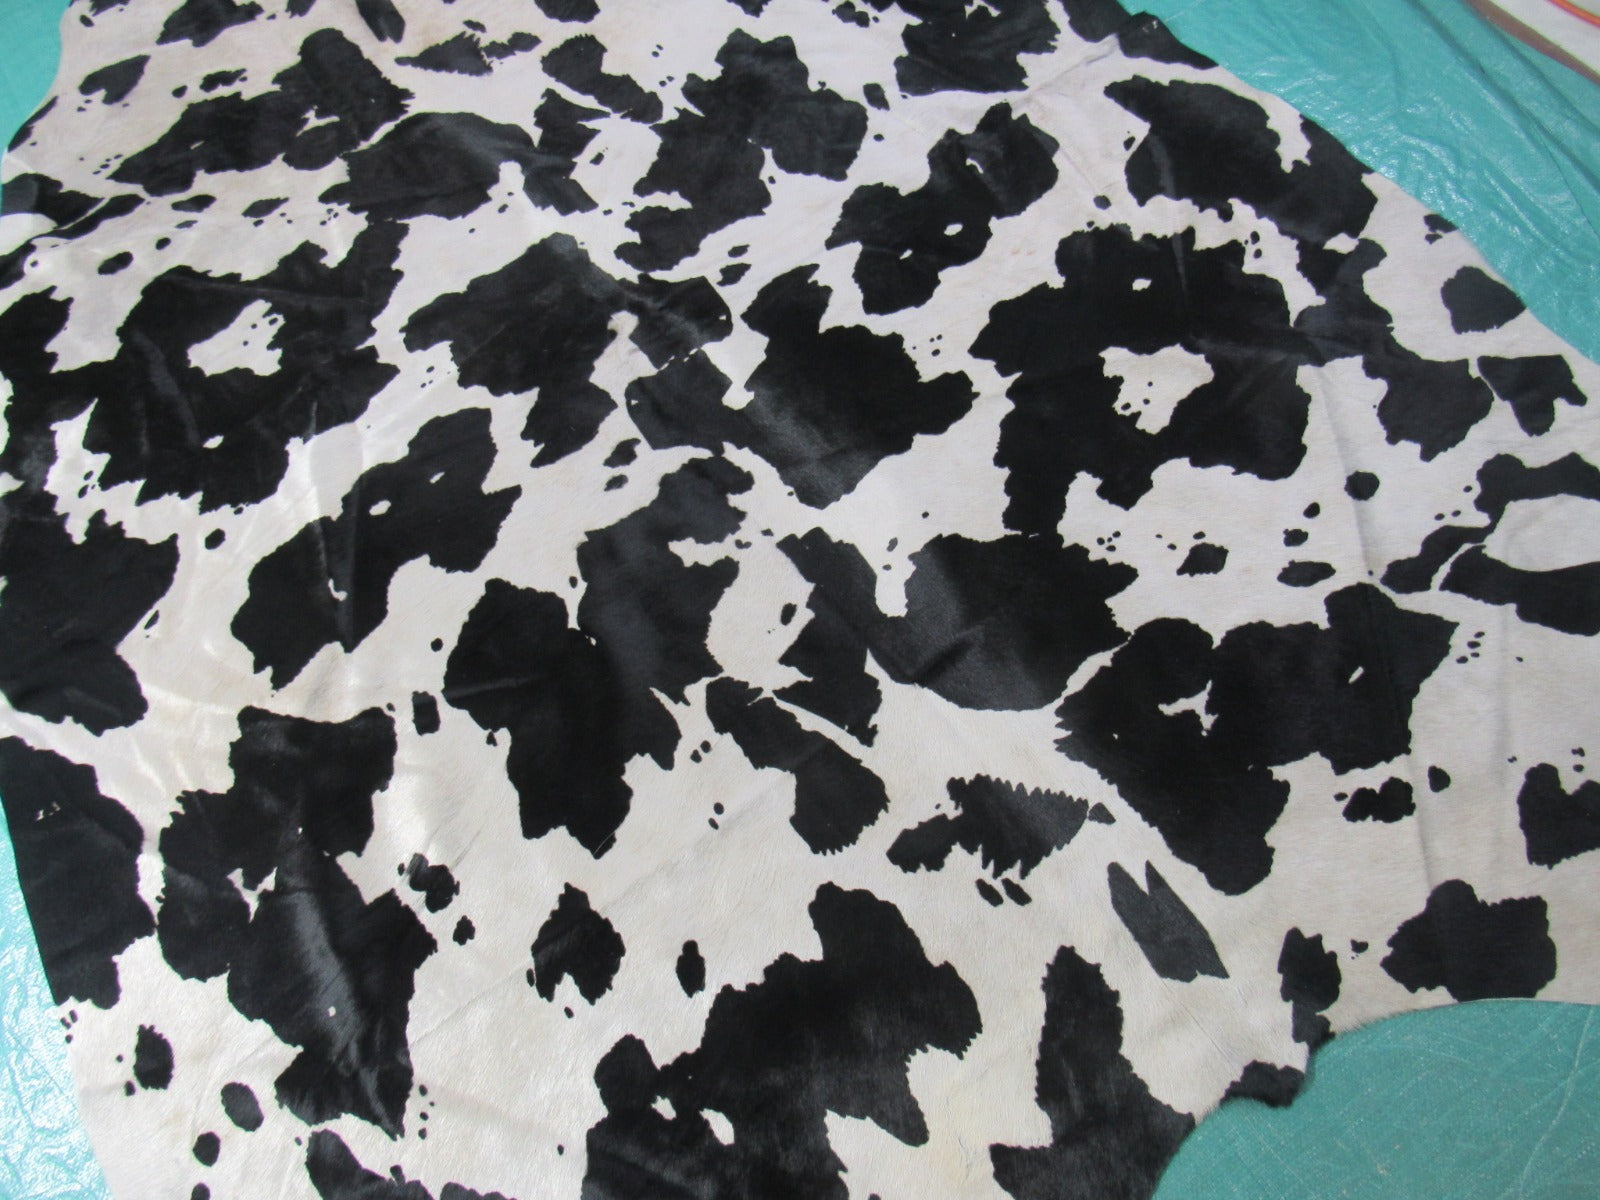 Appaloosa Black & White Printed Cowhide Rug - Size: 7.2x5.5 feet M-1437